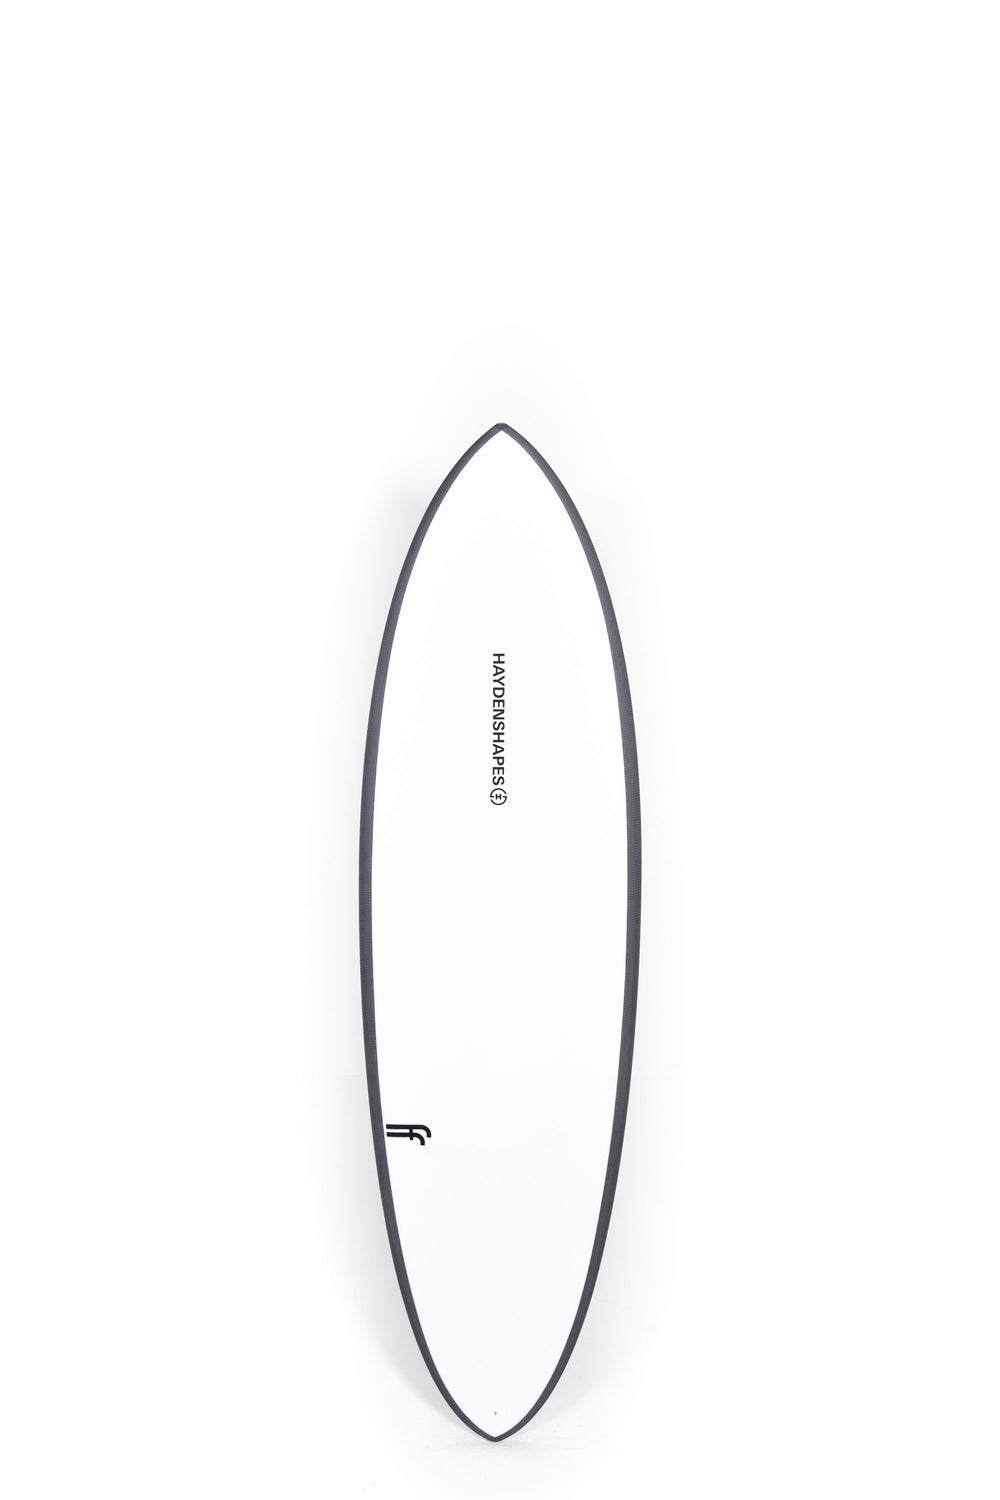 Pukas-Surf-Shop-HS-Surfboards-Hypto-Krypto-Hayden-6_6_-Clear